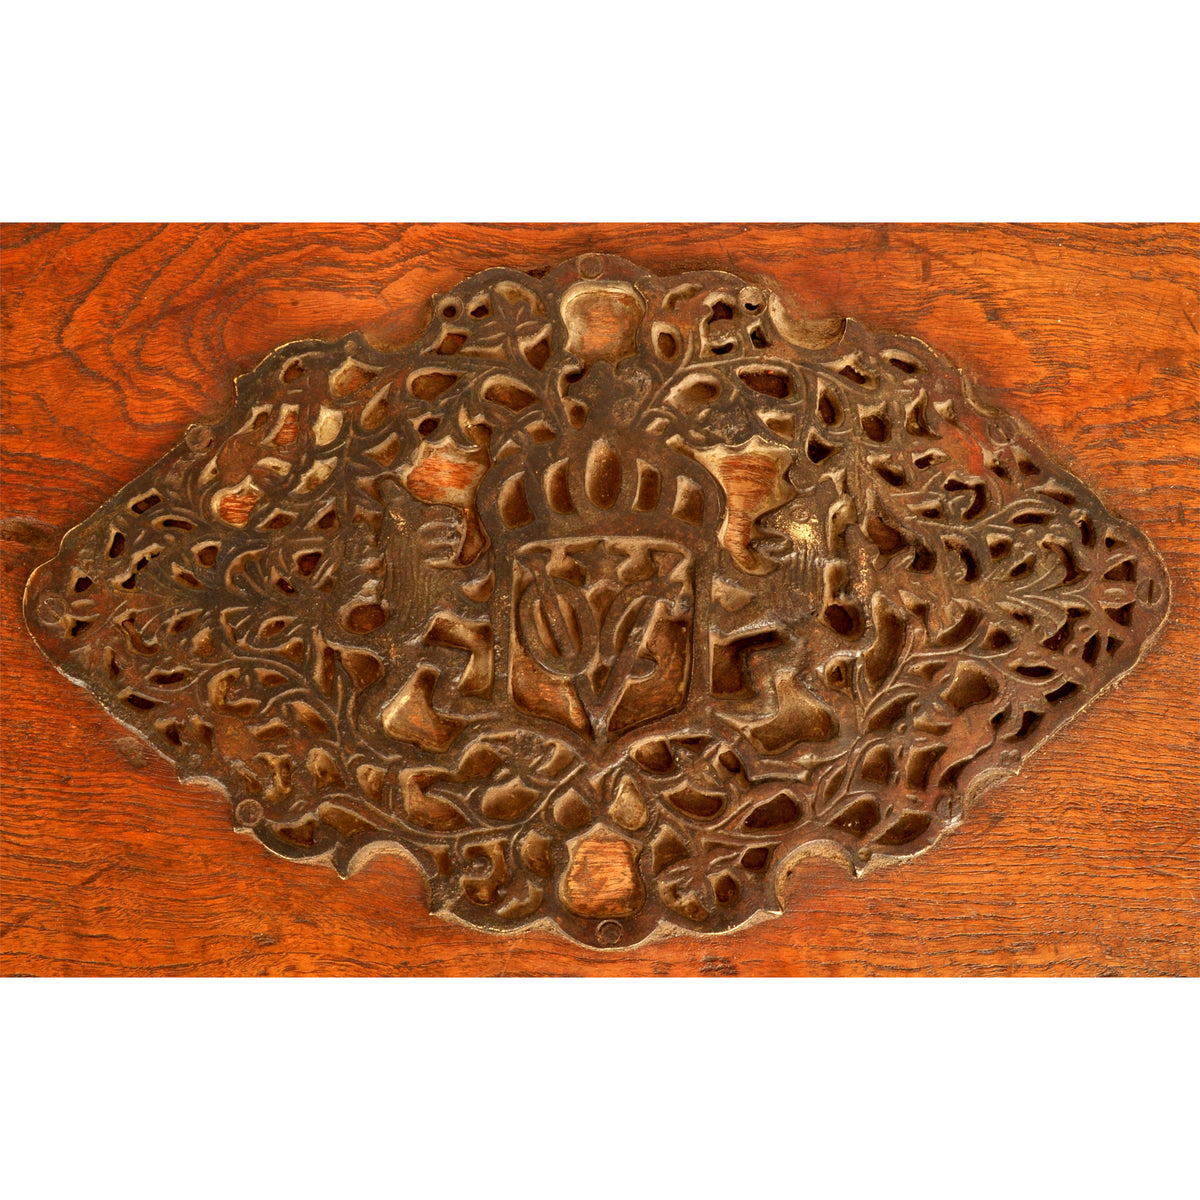 Antique 18th Century Dutch East India Company VOC Carved Teak Governor's Chest, circa 1780